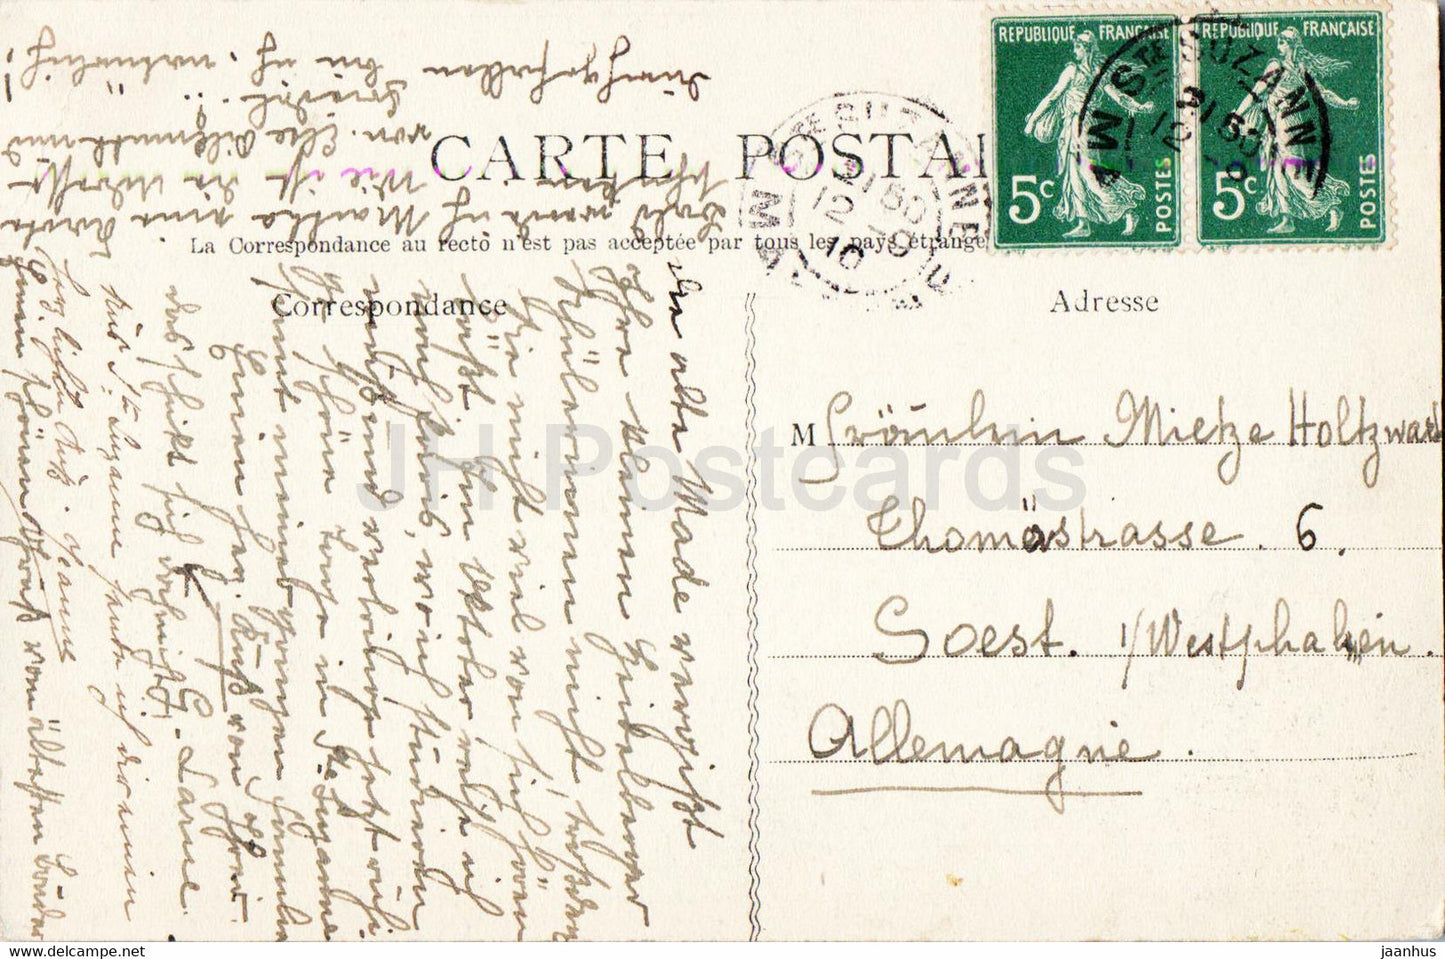 Ste Suzanne - Le Chateau - Cote Sud - castle - 12 - old postcard - 1910 - France - used